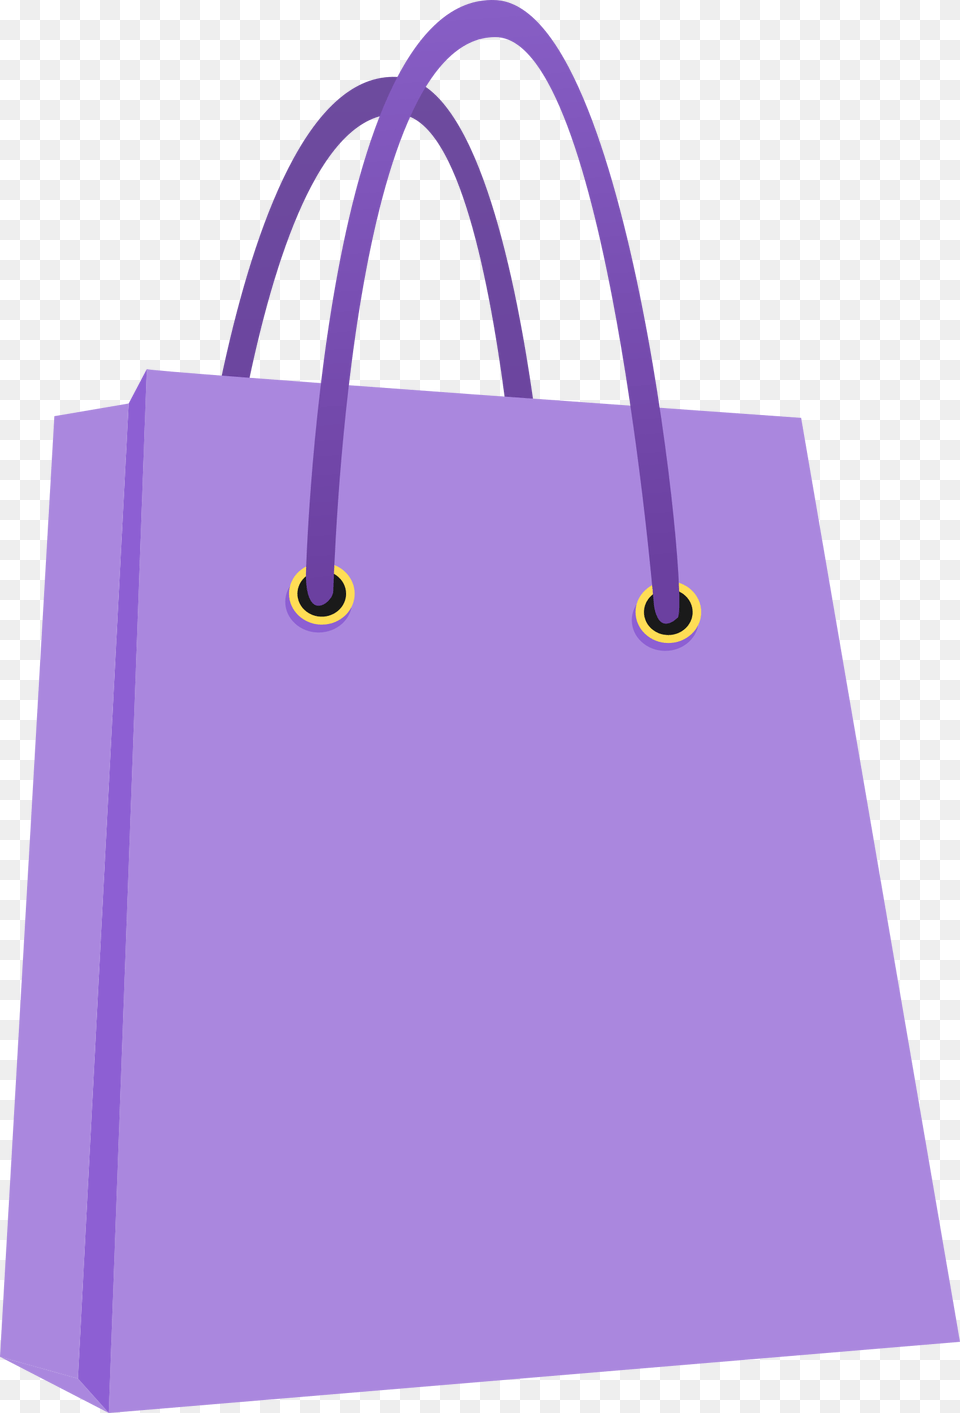 Svg Freeuse Stock Tote Shopping Trolleys Clip Art Clip Art Shopping Bag, Accessories, Handbag, Tote Bag, Shopping Bag Png Image